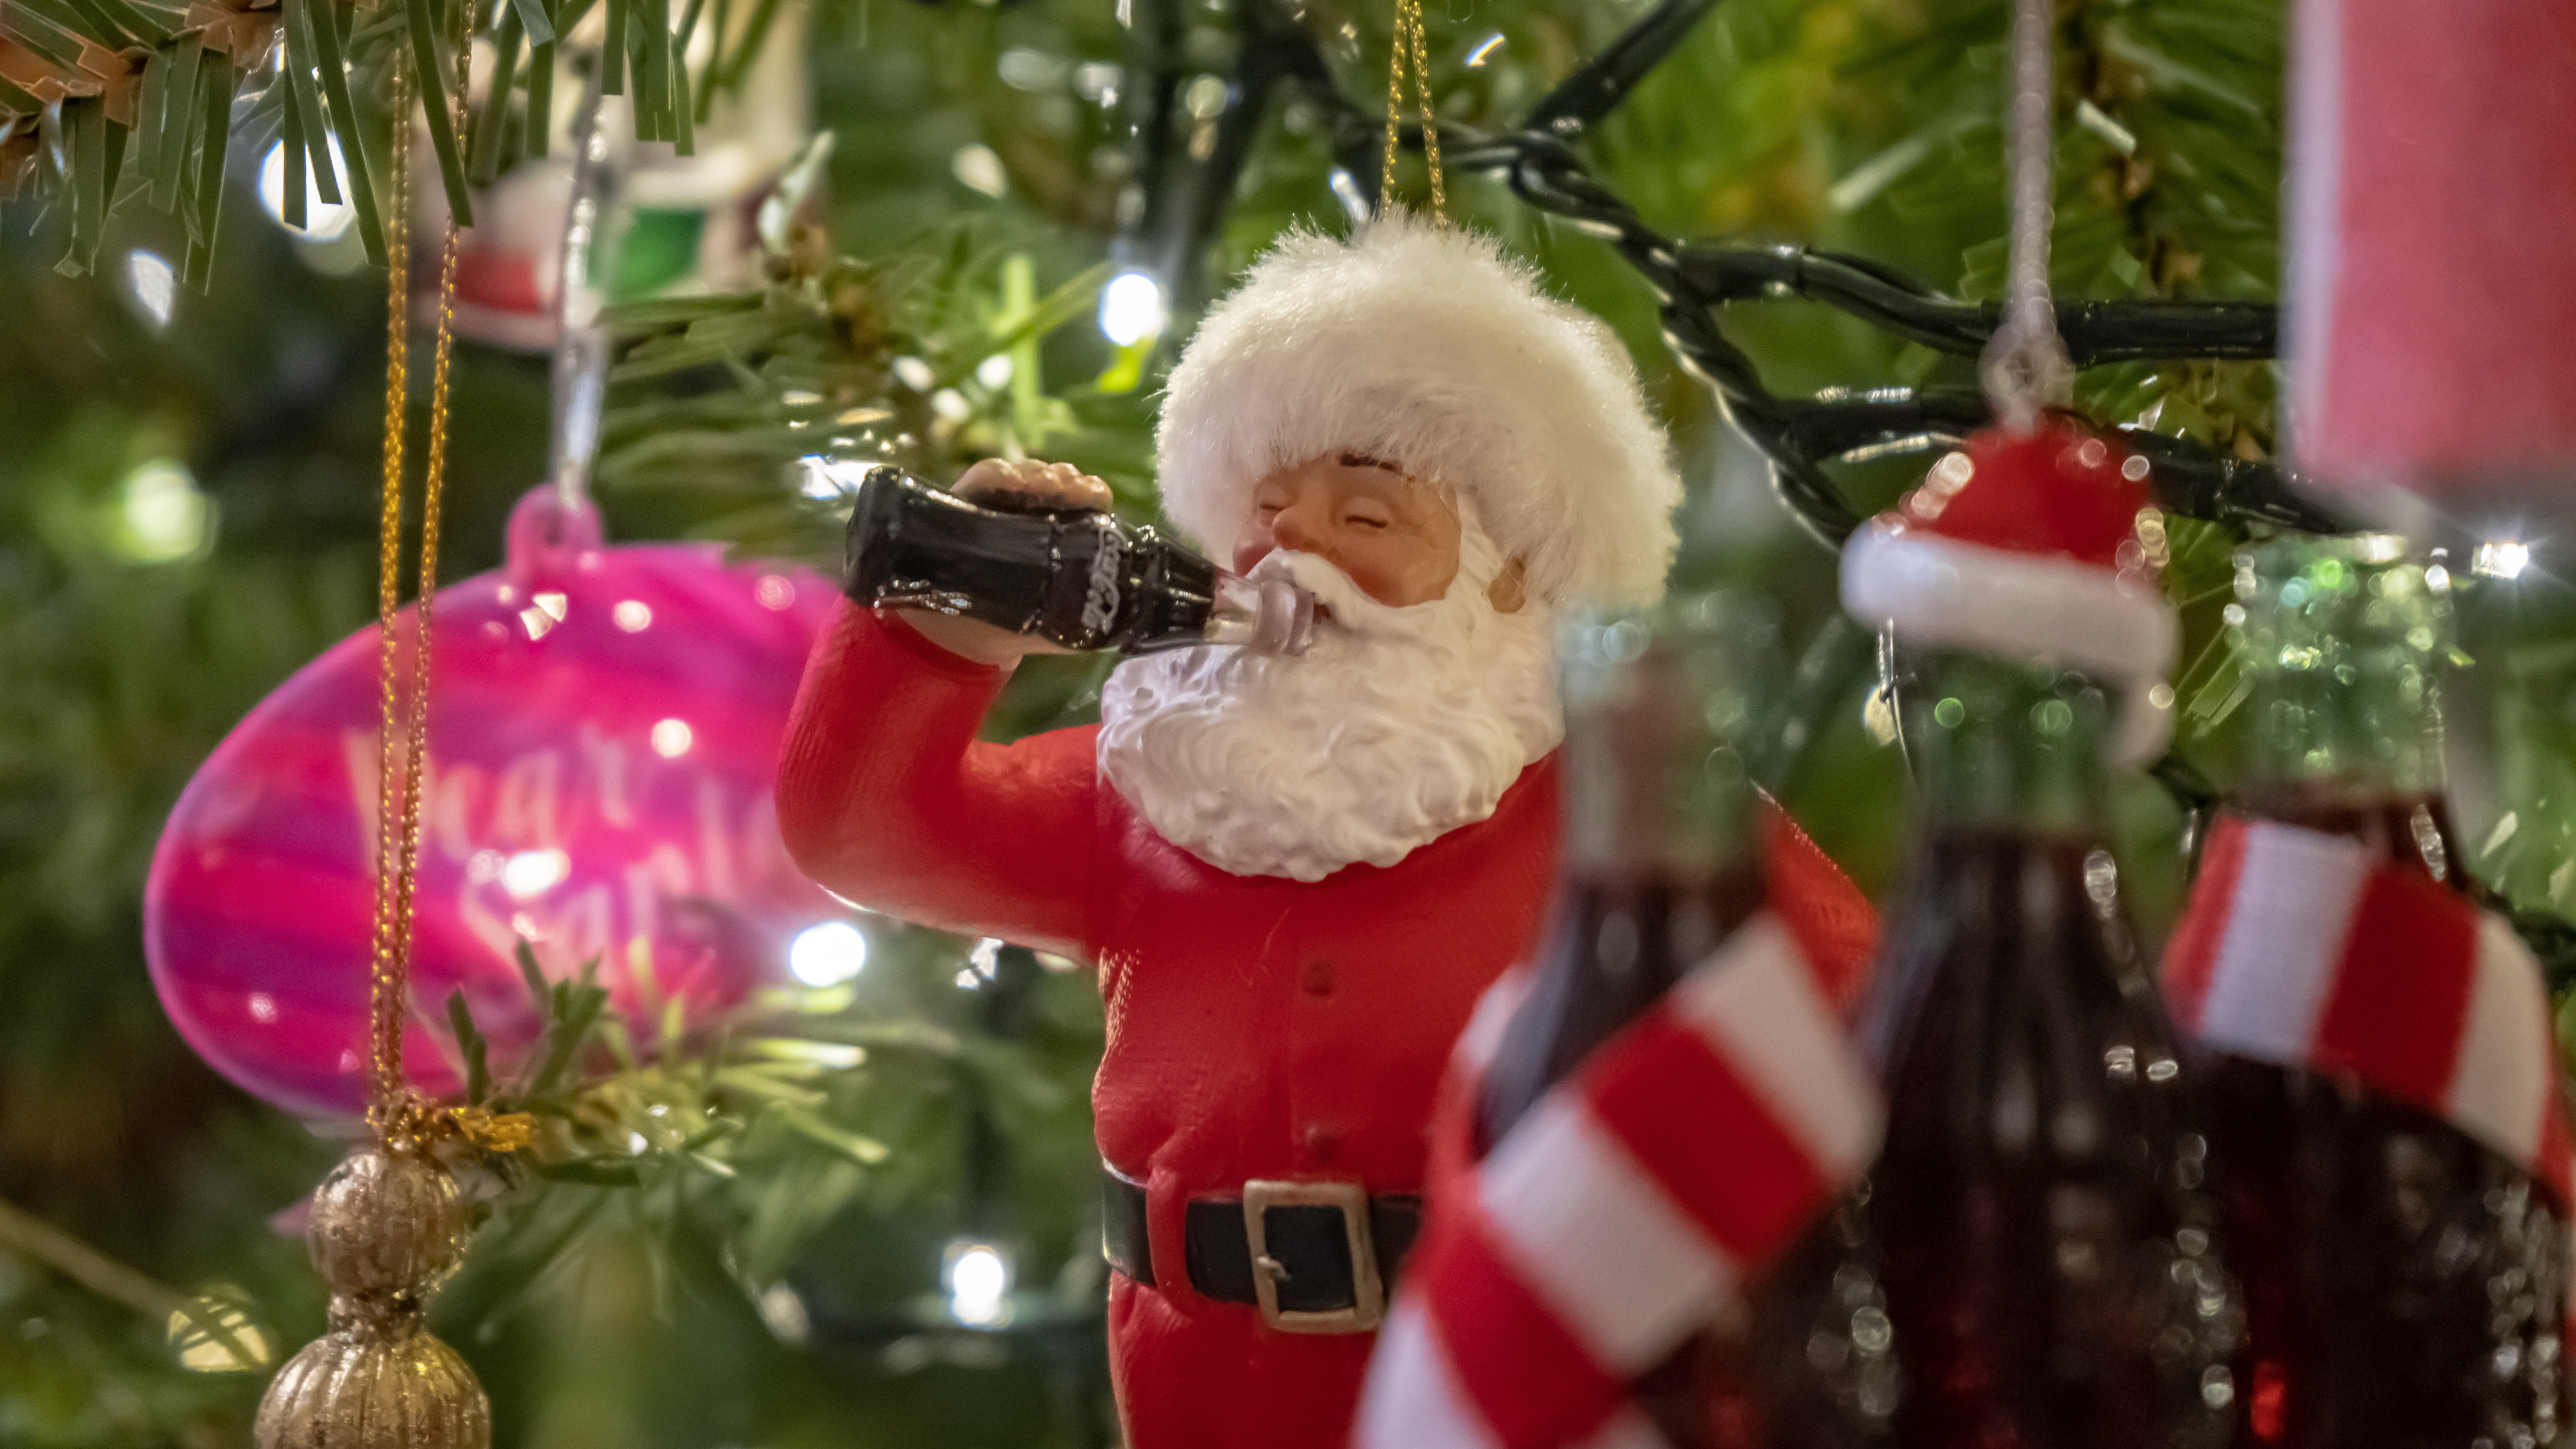 A Santa Claus Christmas tree decoration drinking cola.